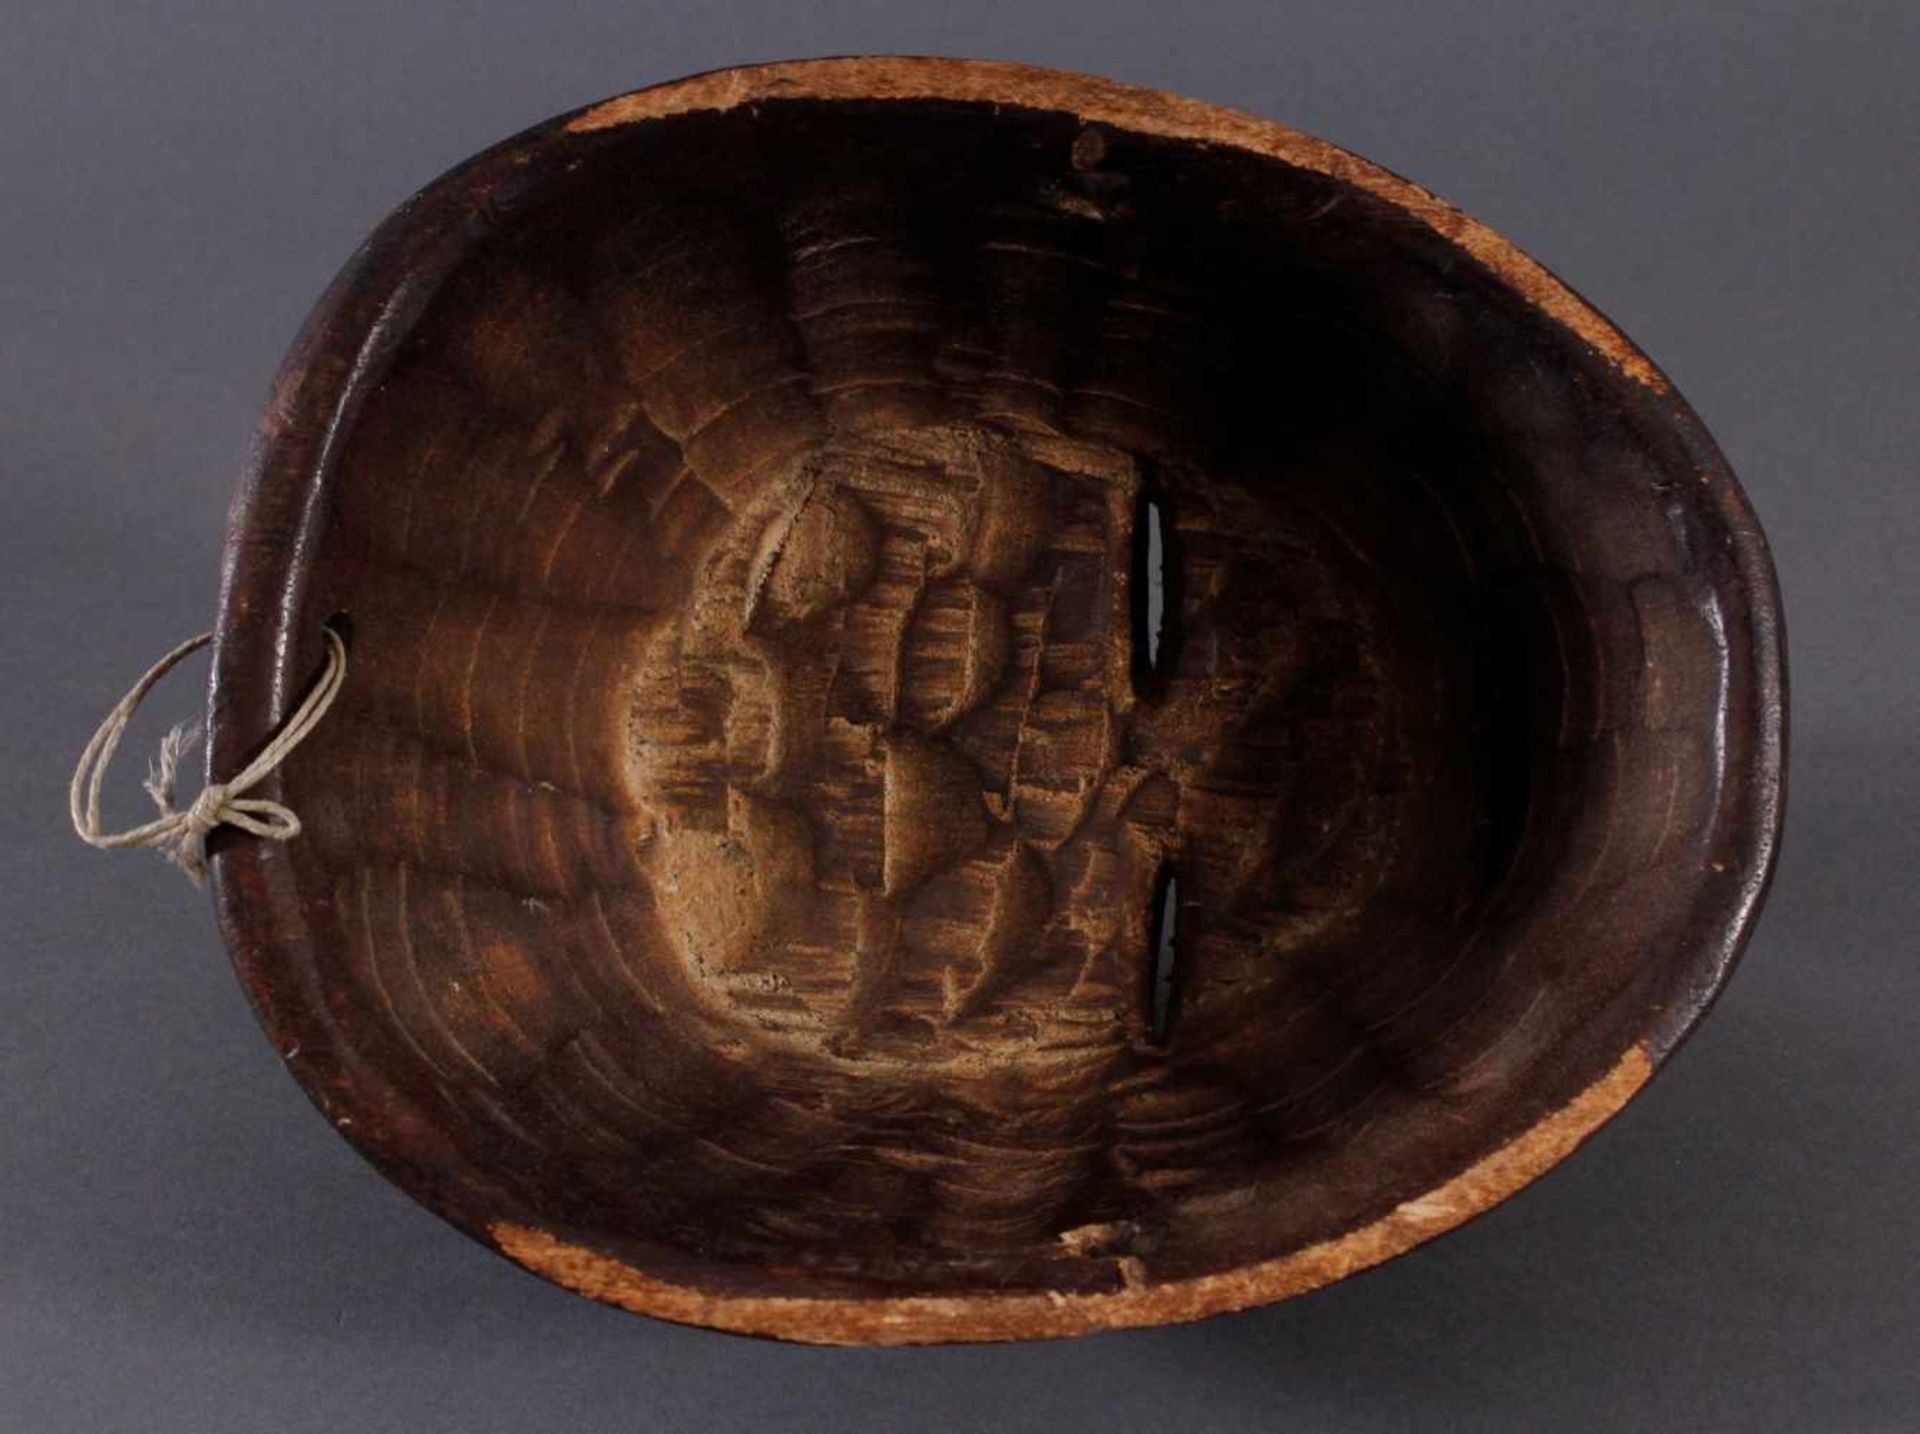 Antike Maske, Mbunda, SambiaHolz, geschnitzt, braune Patina, ovale Form, Narbentatauierung, ca. L-24 - Image 6 of 6